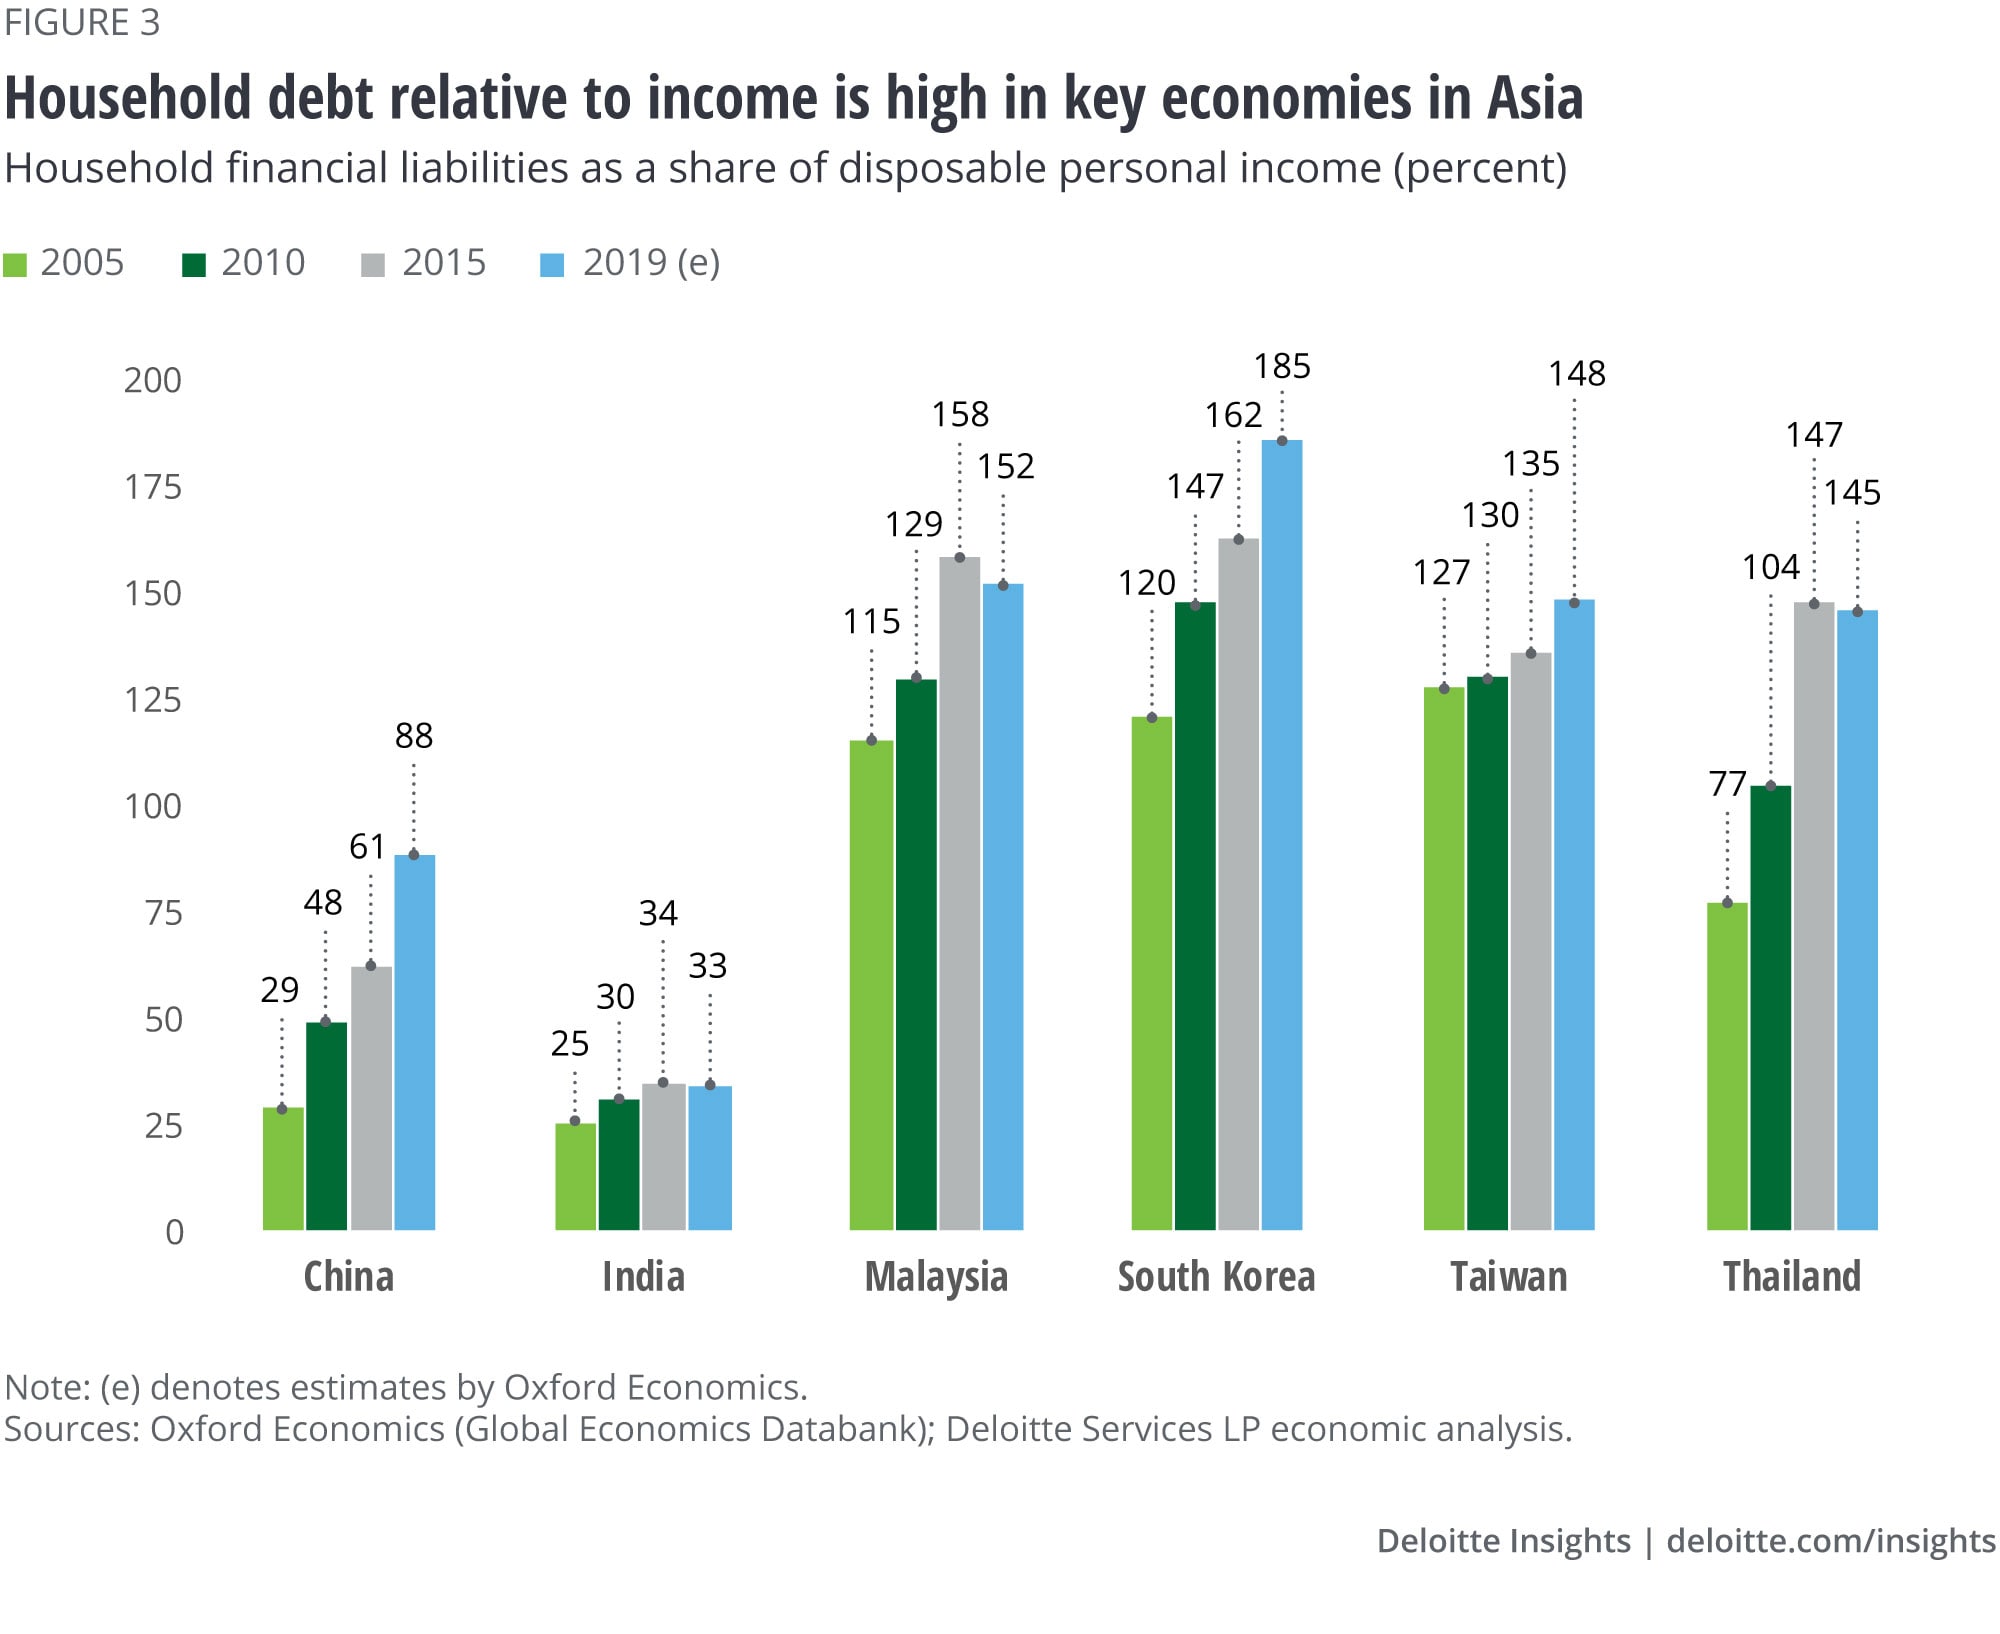 Household debt is high in key economies in Asia